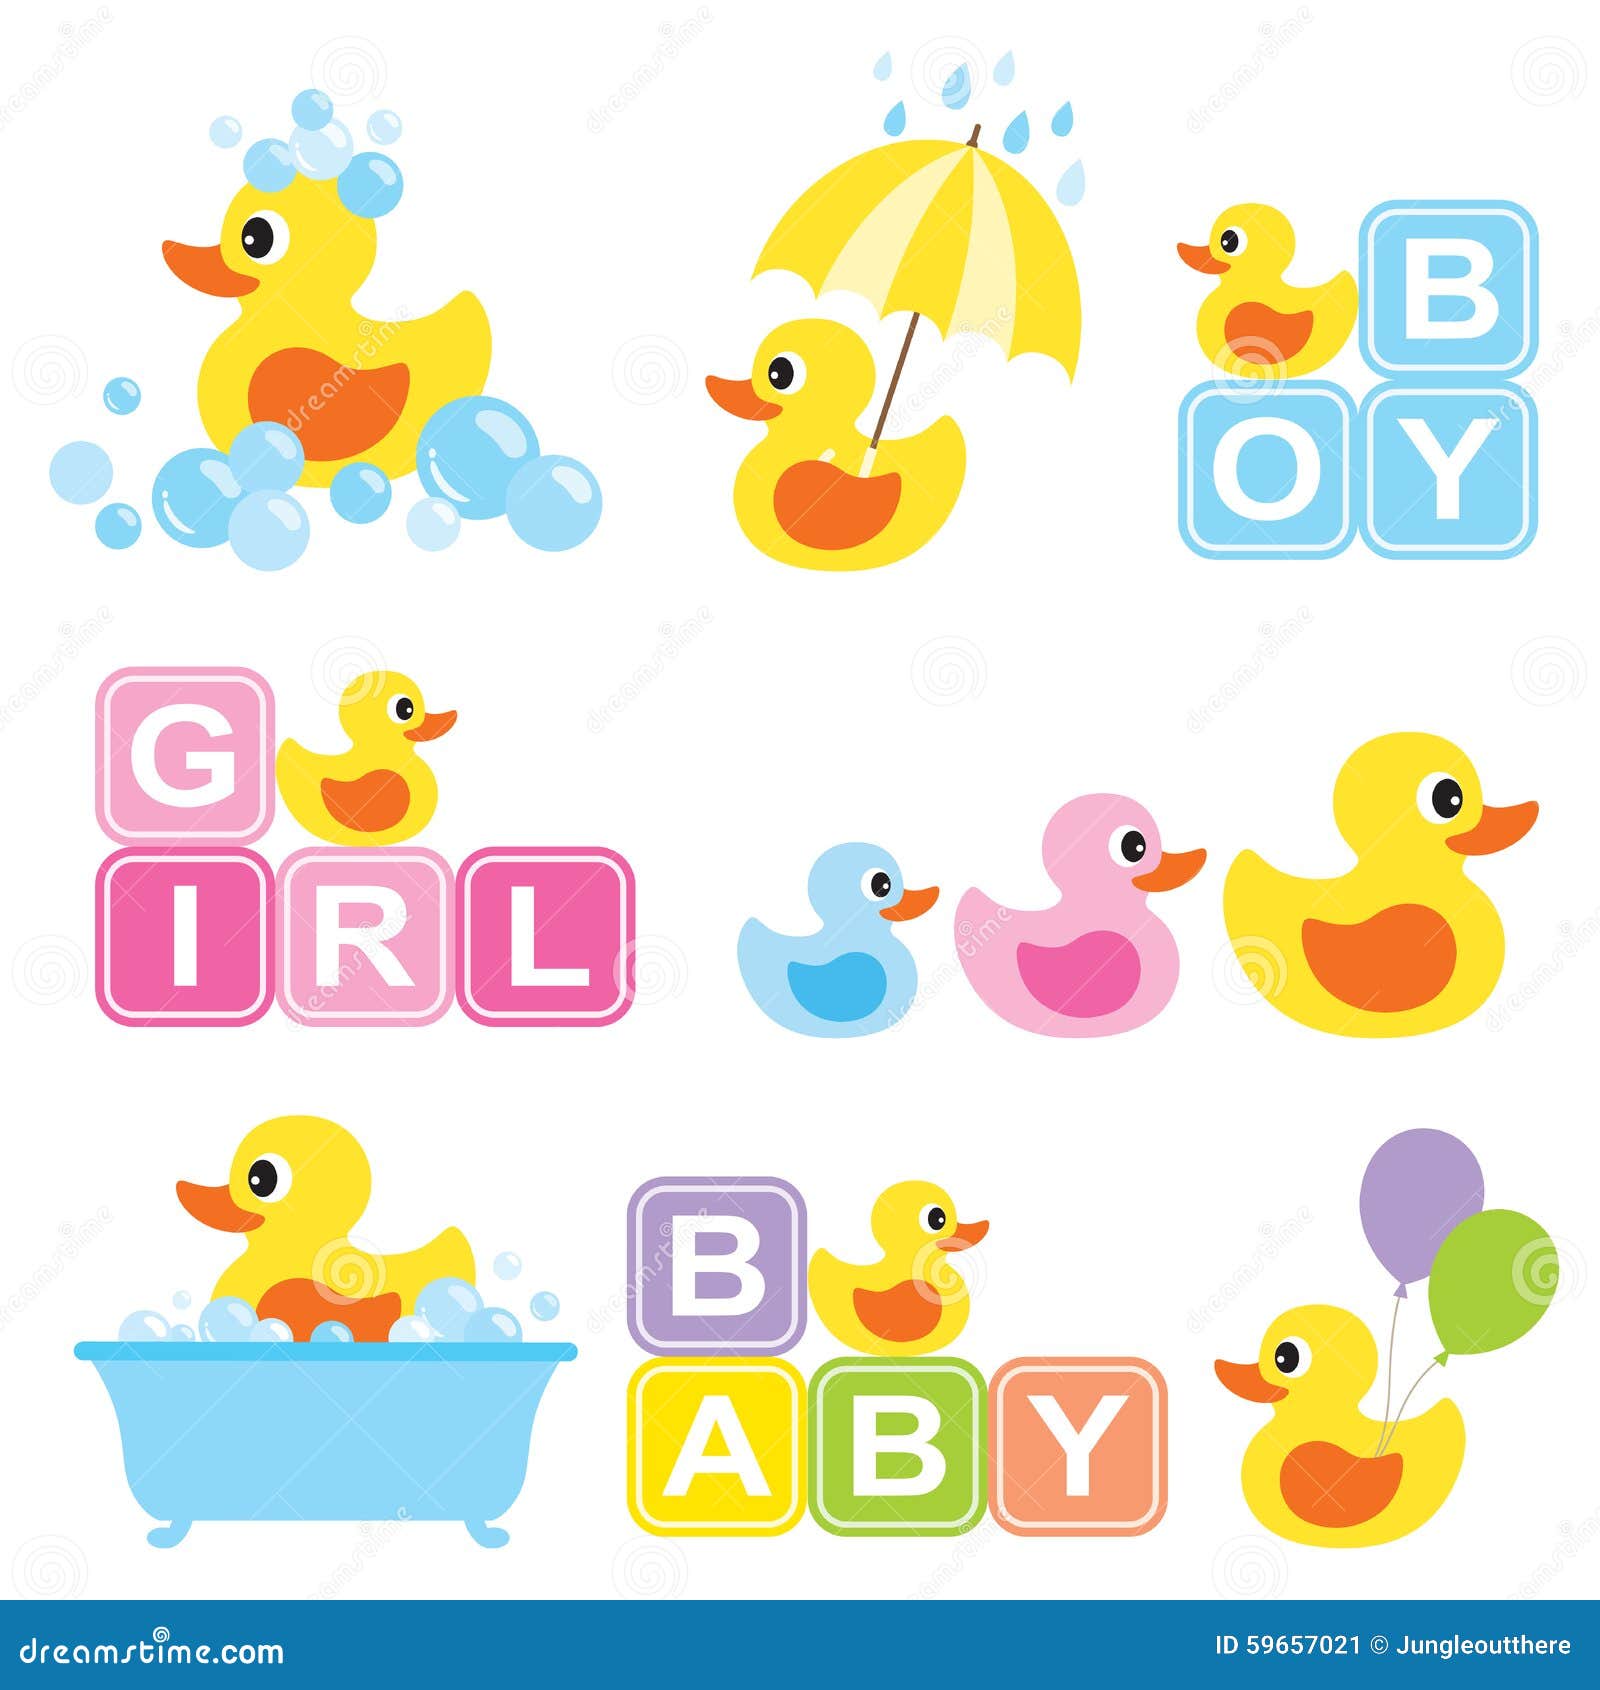 baby rubber duck